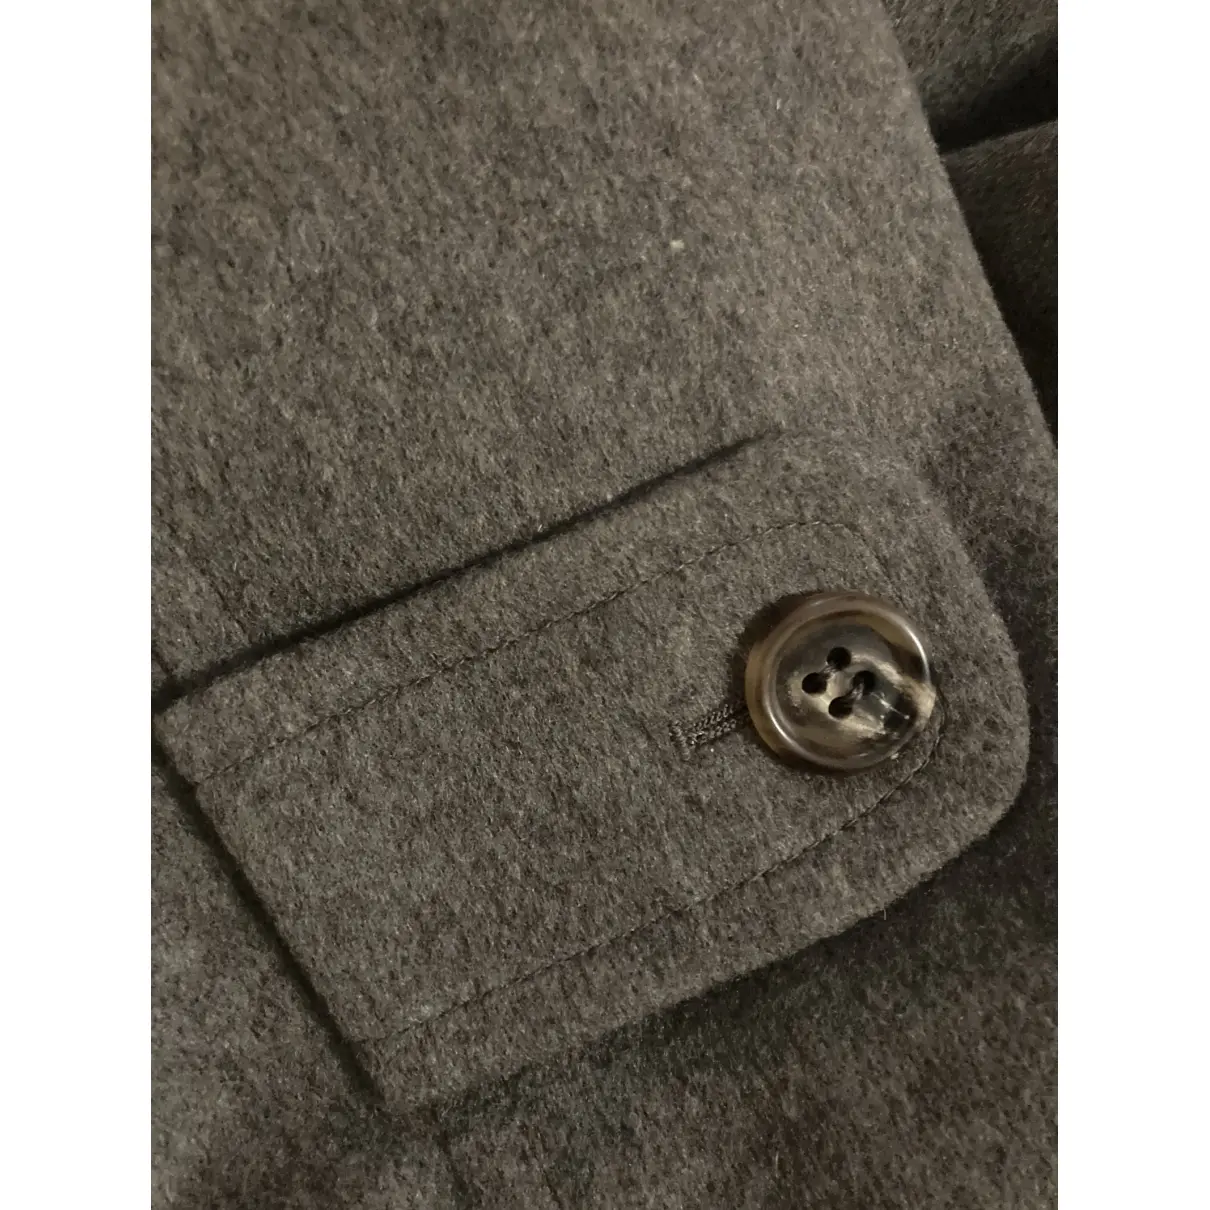 Cashmere coat Agnona